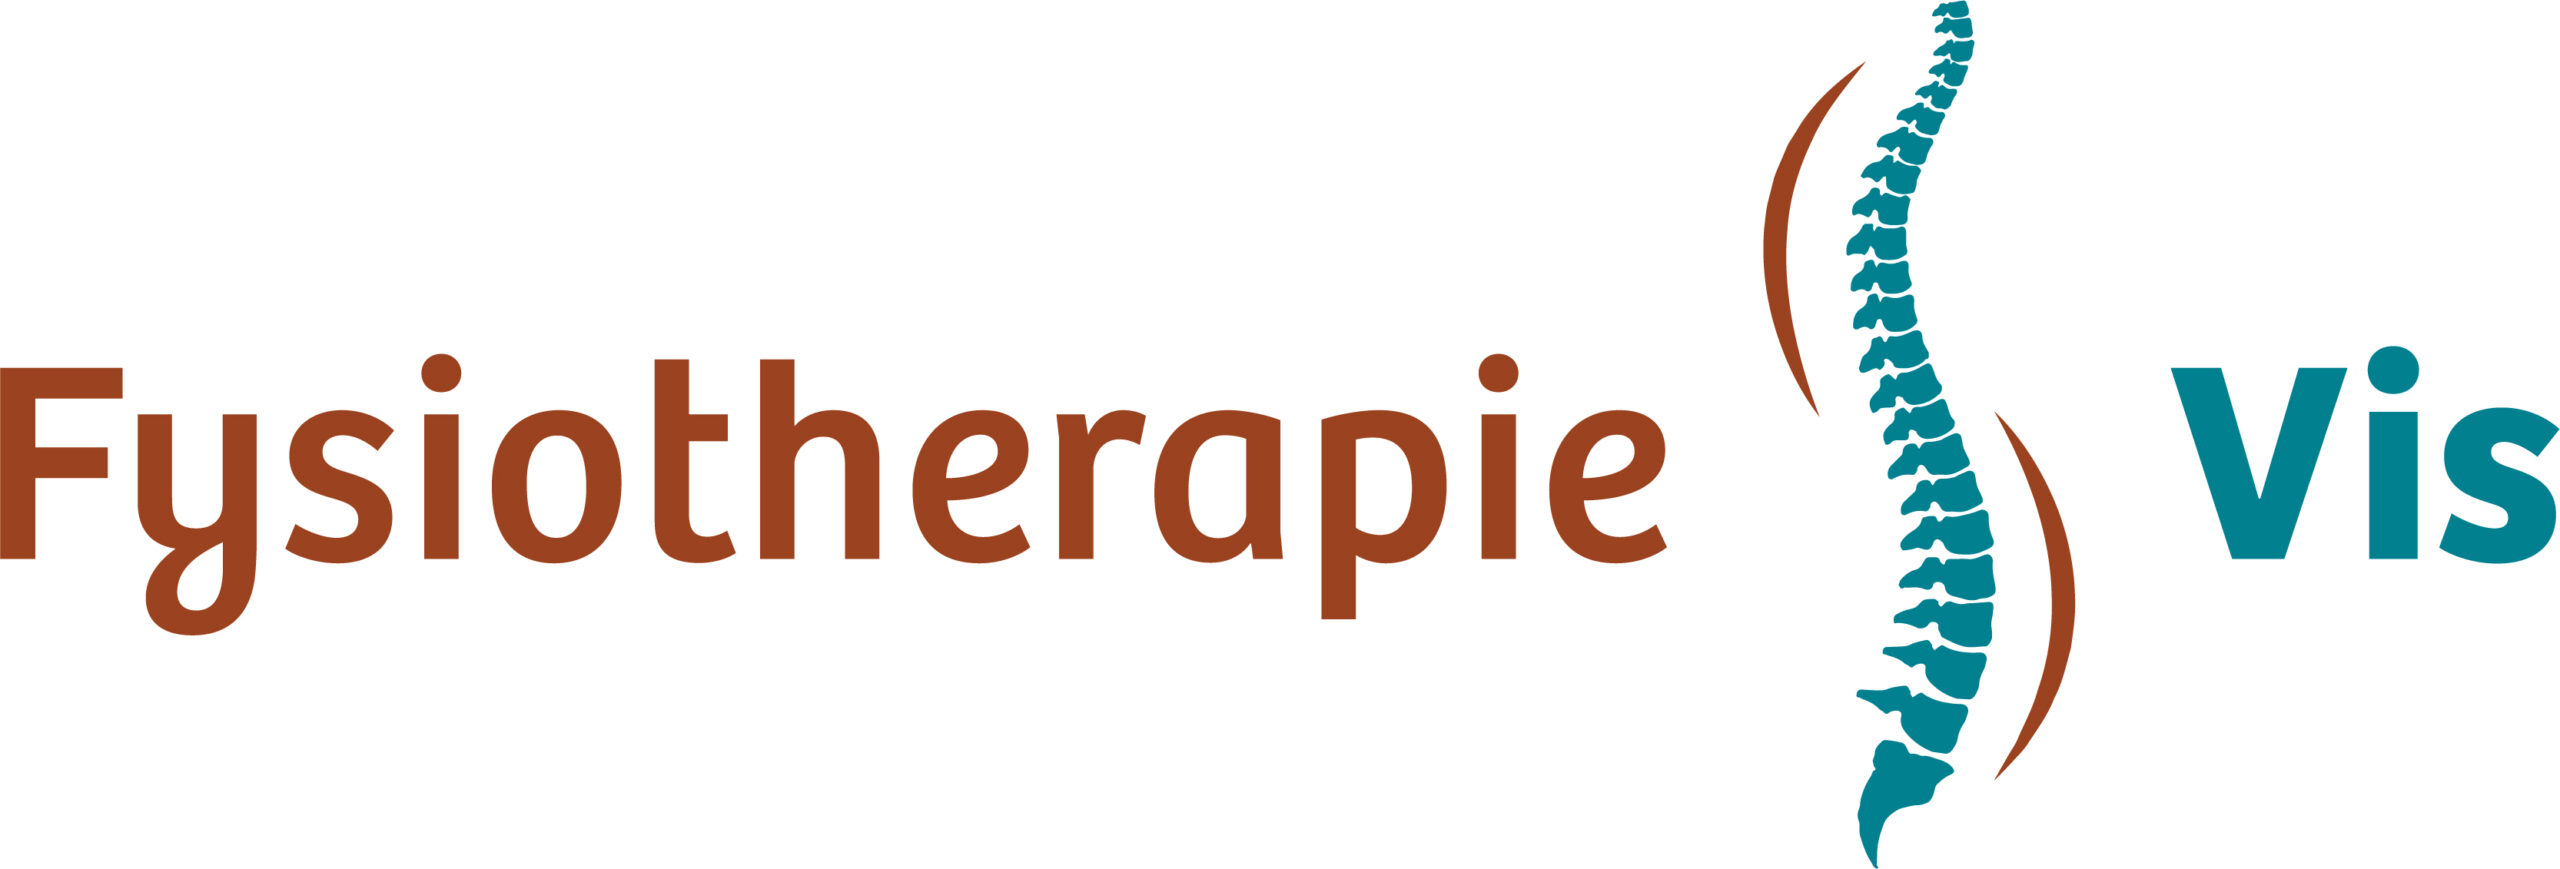 Fysiotherapie Vis logo